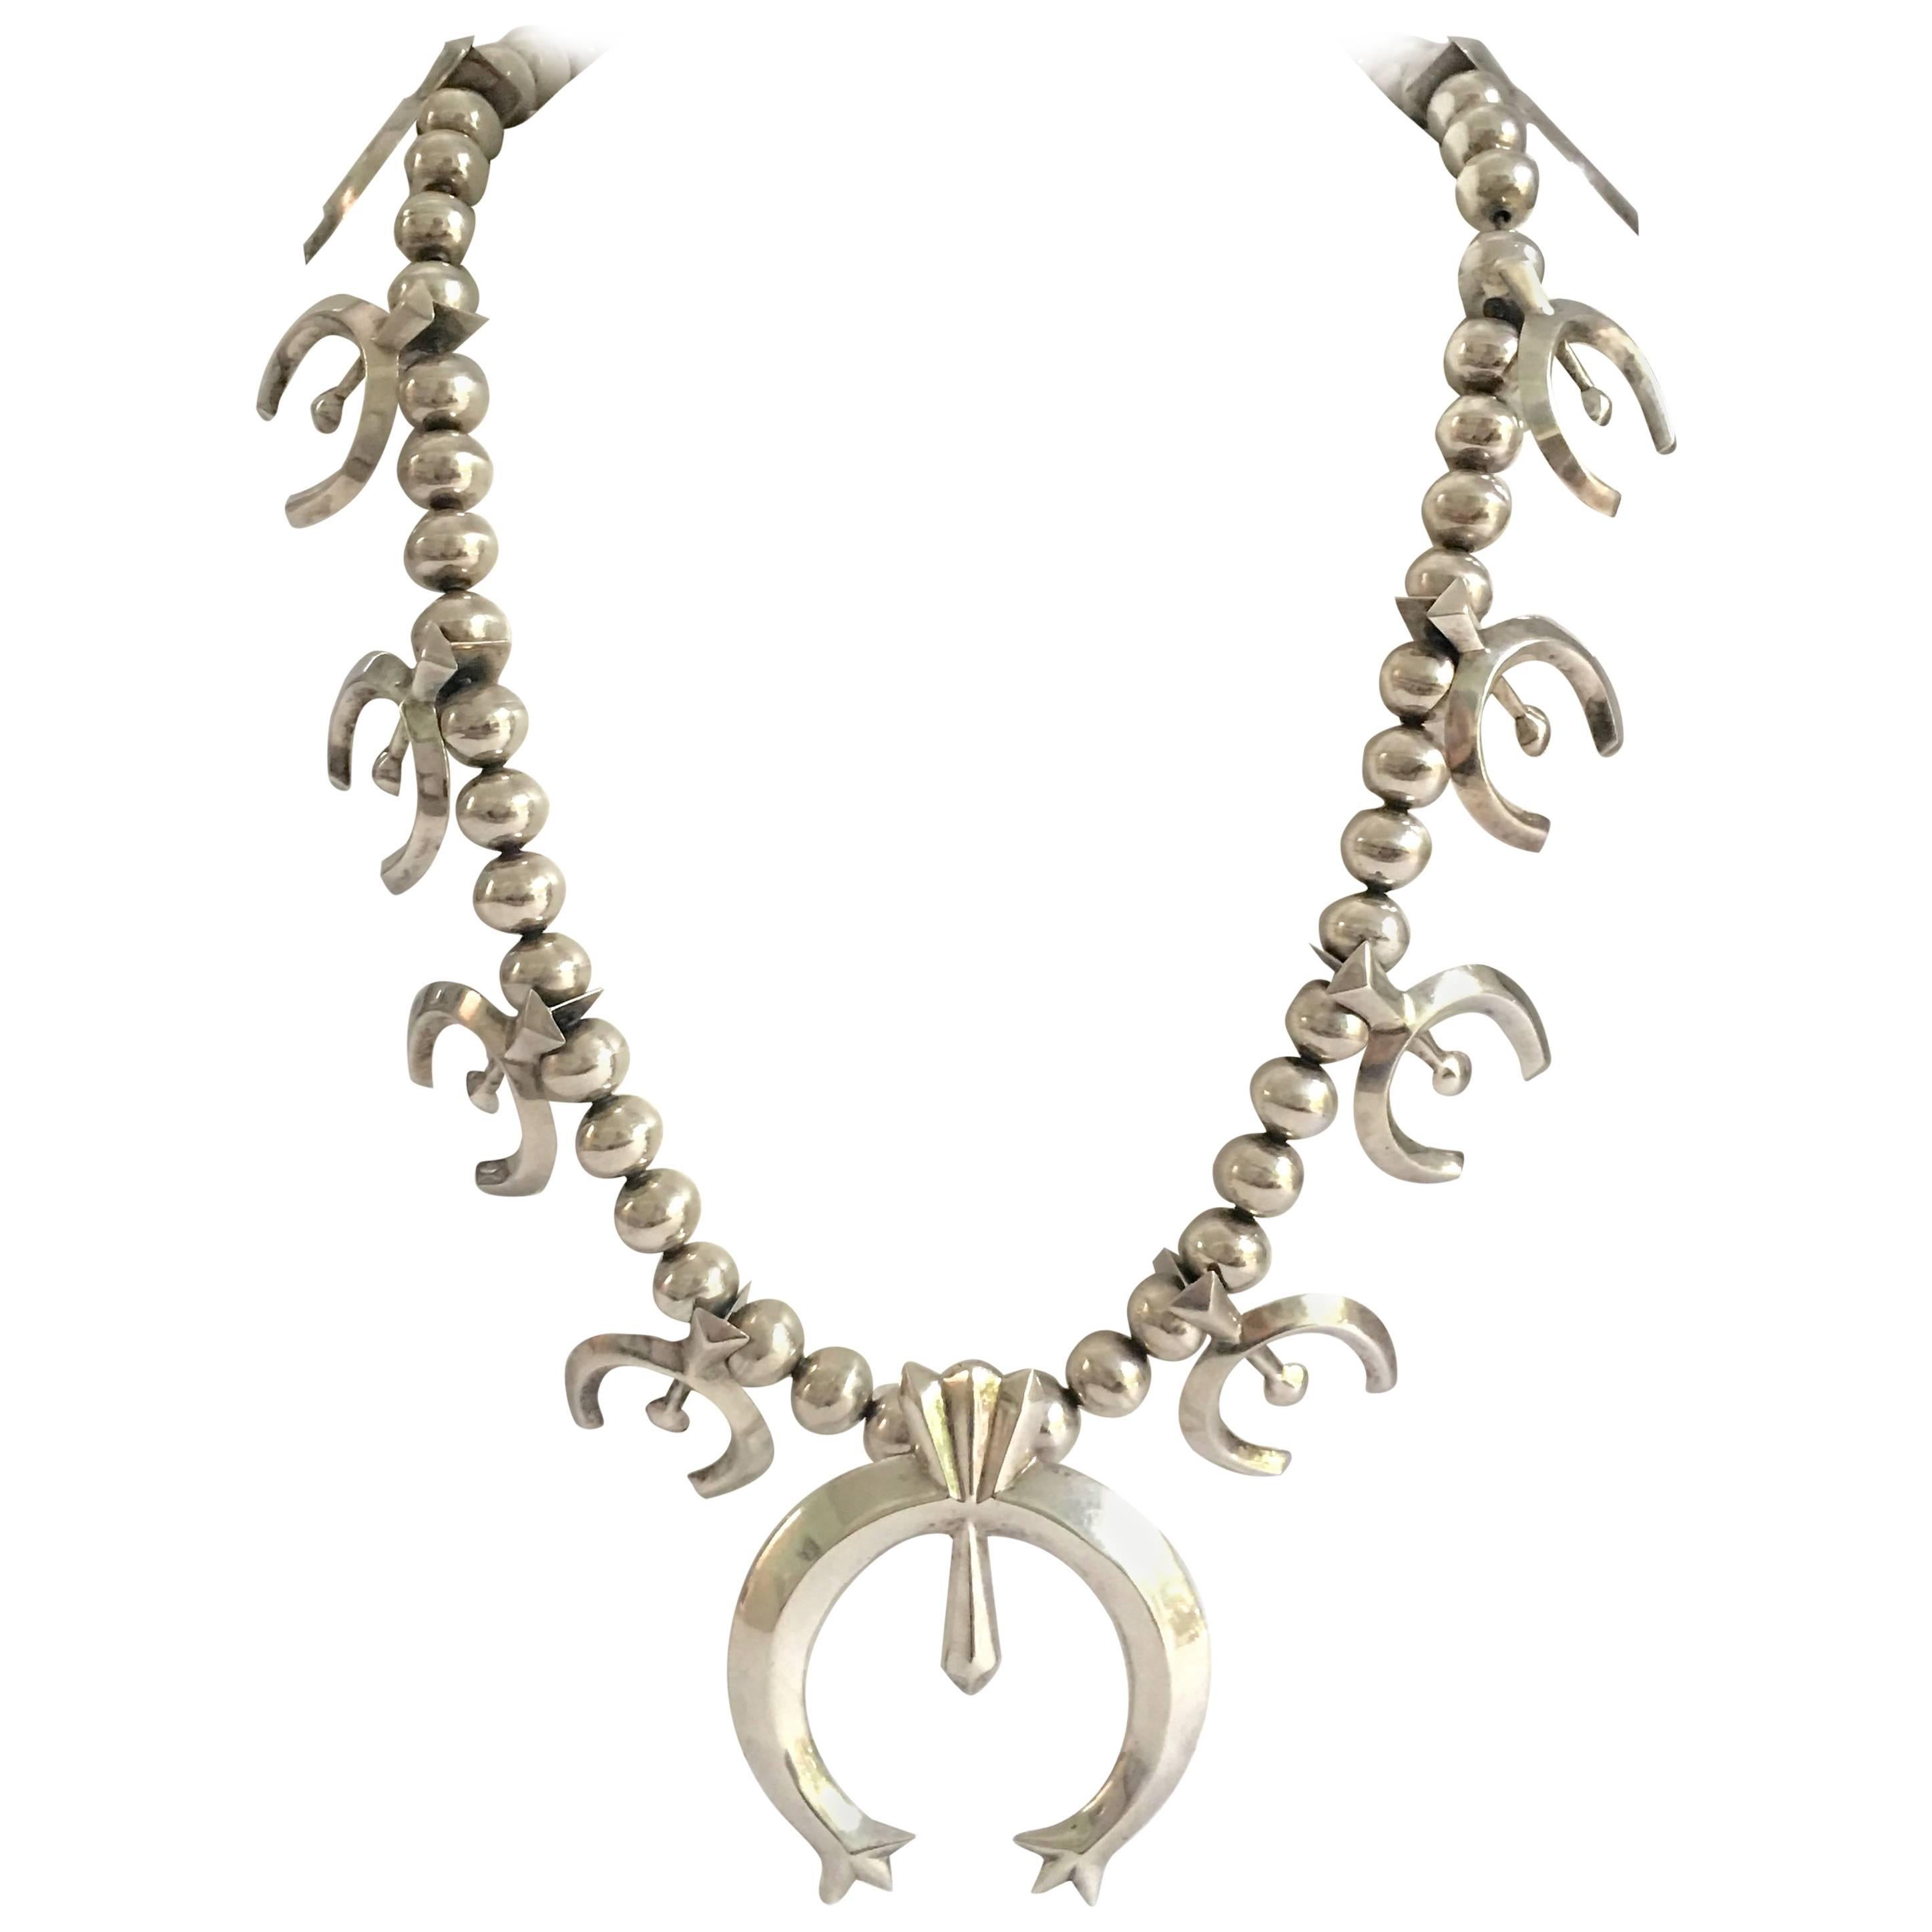 1940s Sterling Silver "Naja" Squash Blossom Necklace